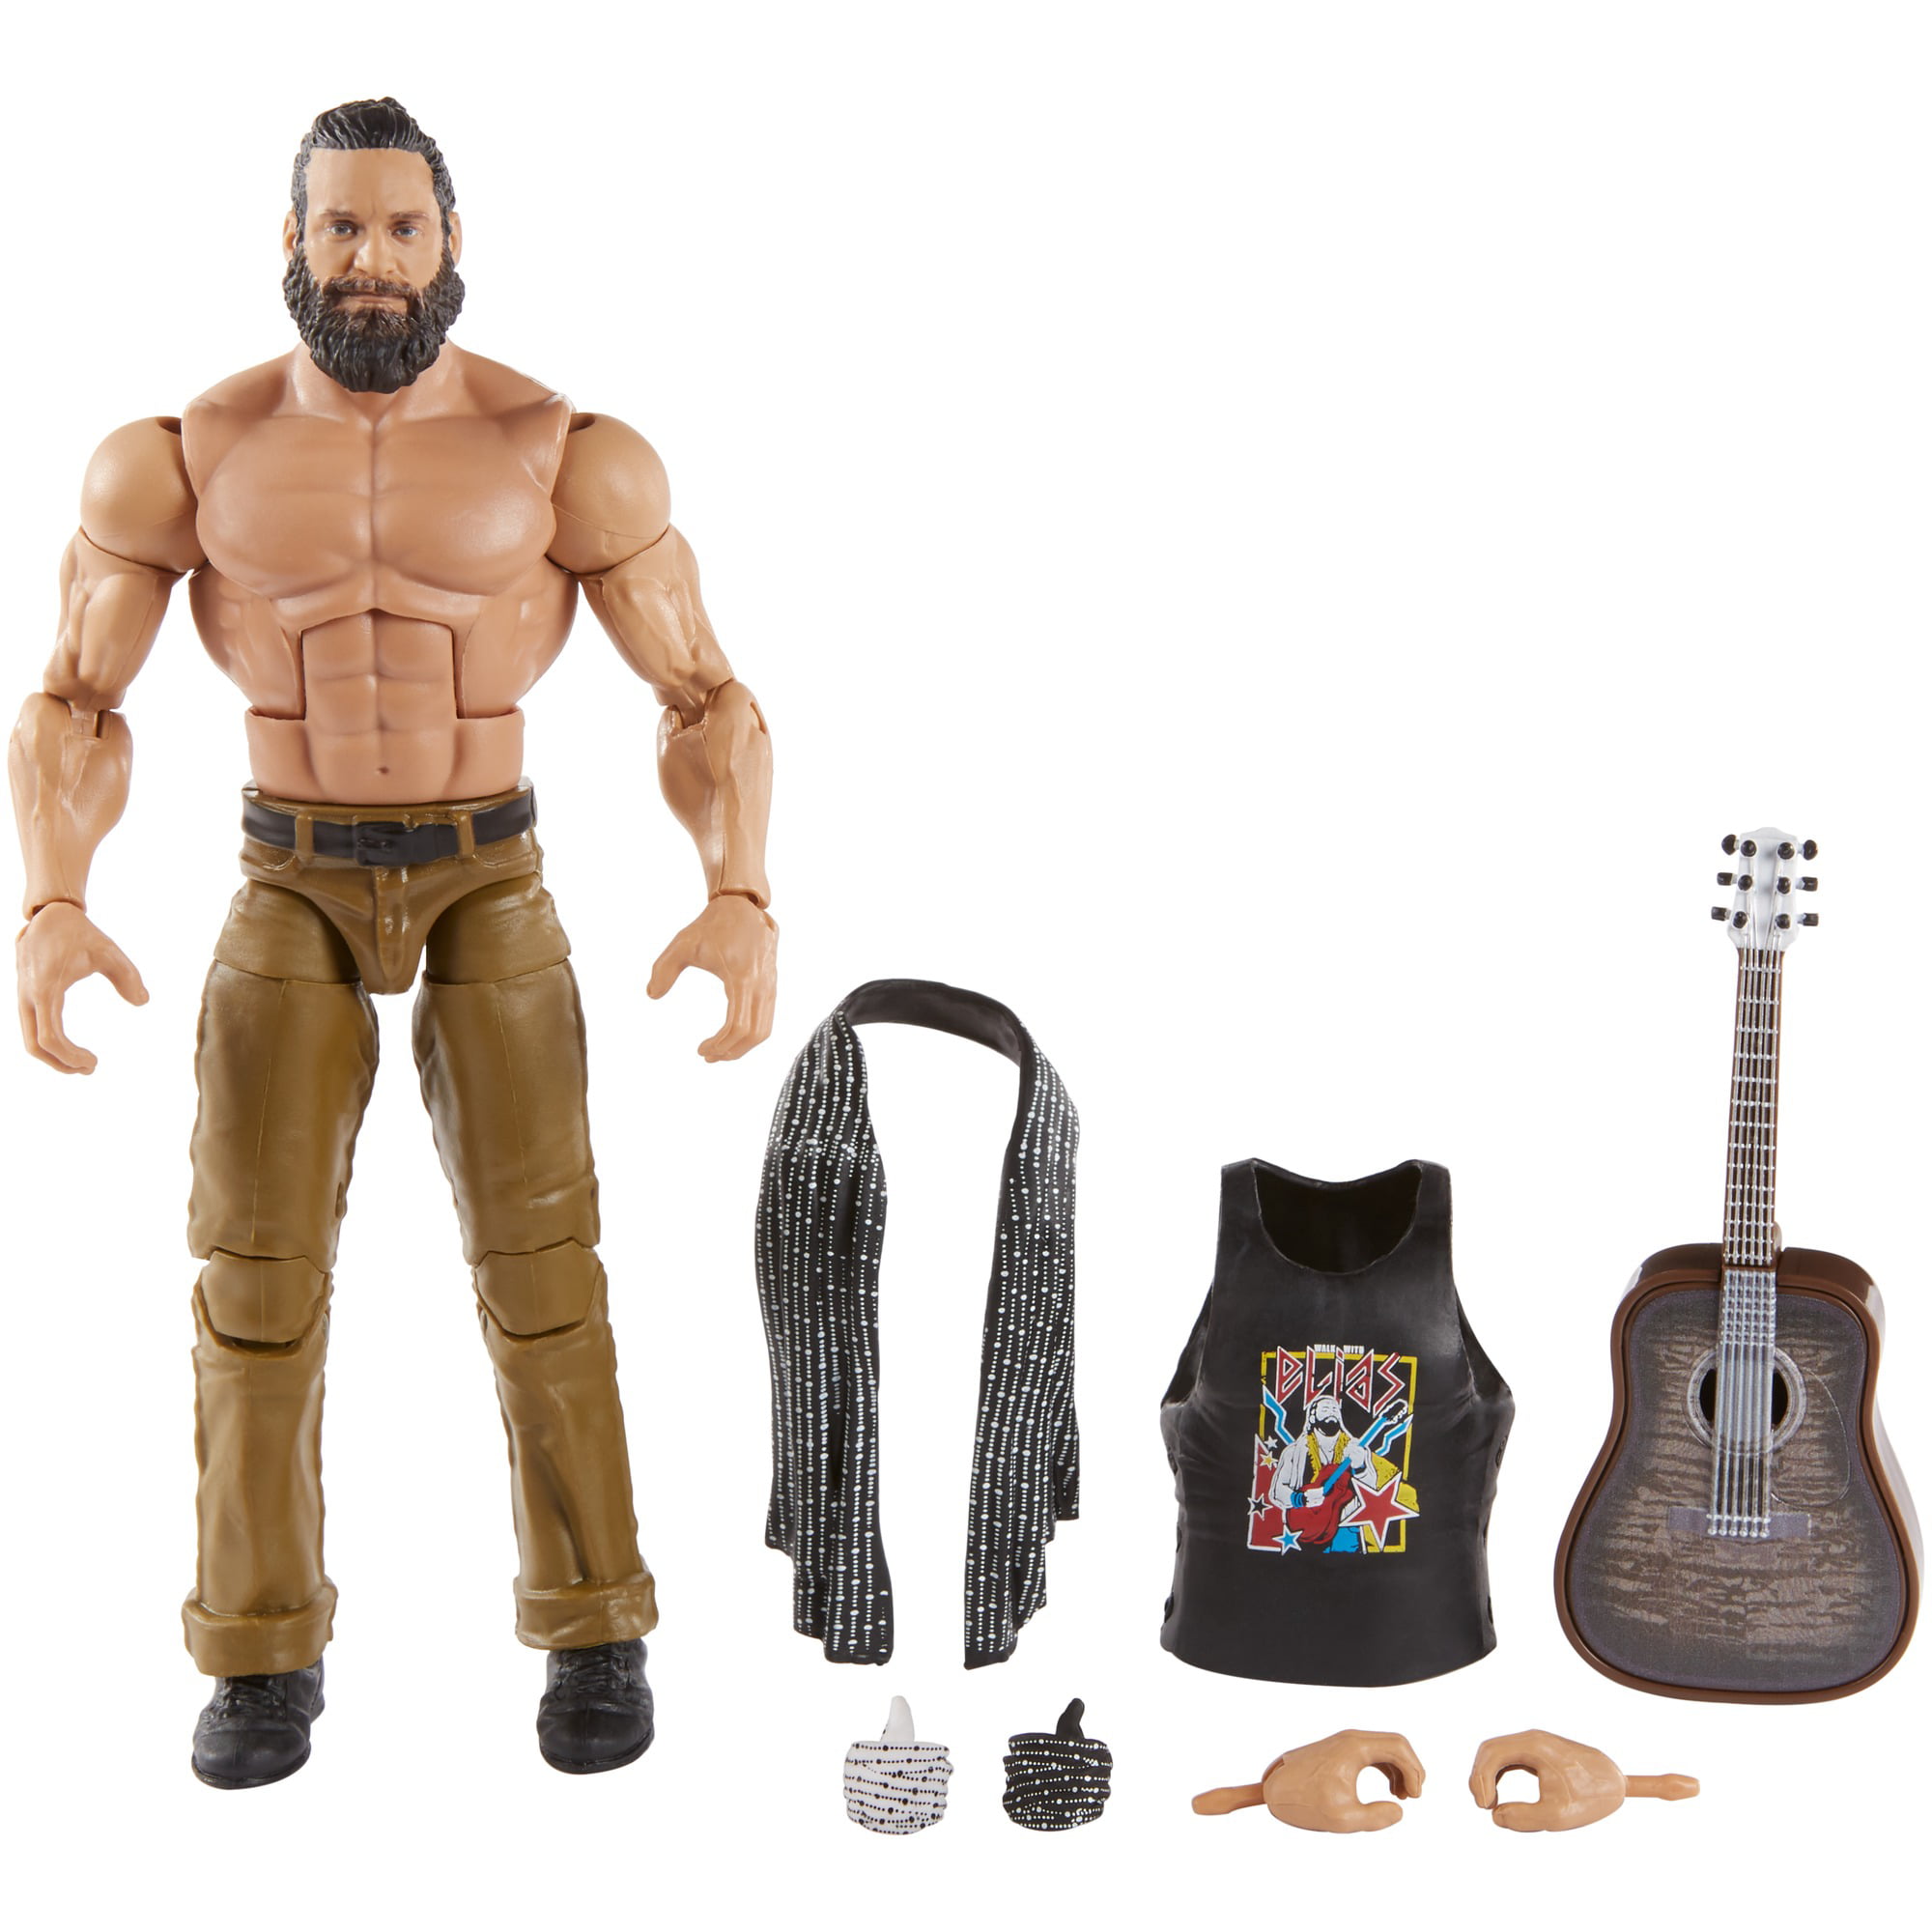 2019 Mattel WWE Wrekkin' Elias Wrestling 6" Action Figure With Guitar for sale online 